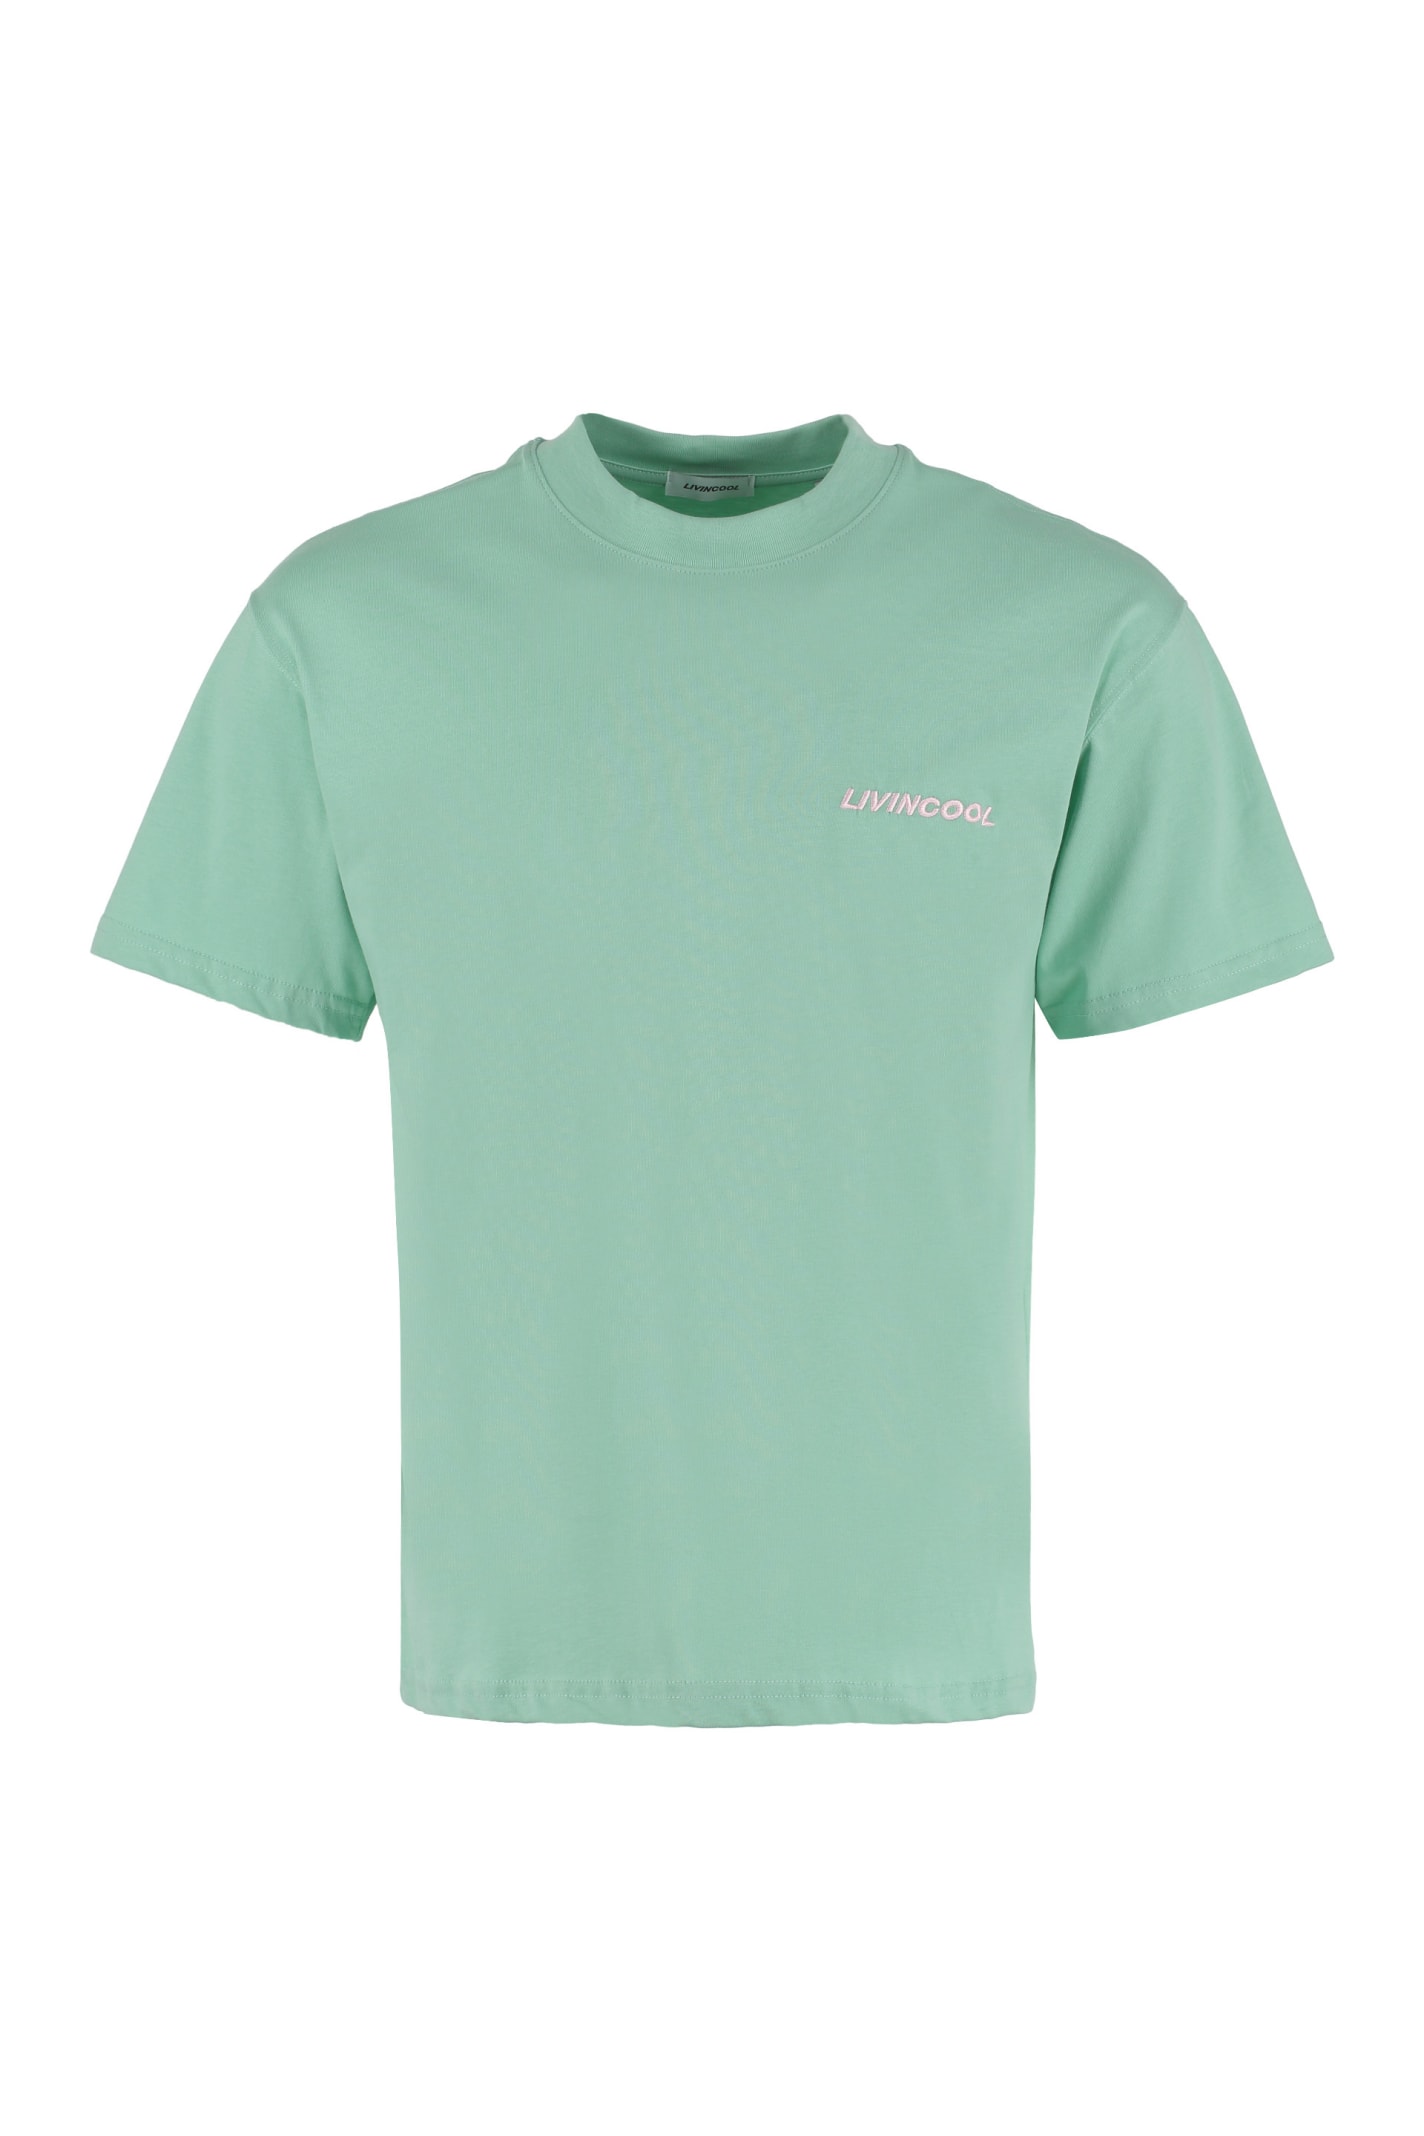 Livincool Logo Cotton T-shirt In Green